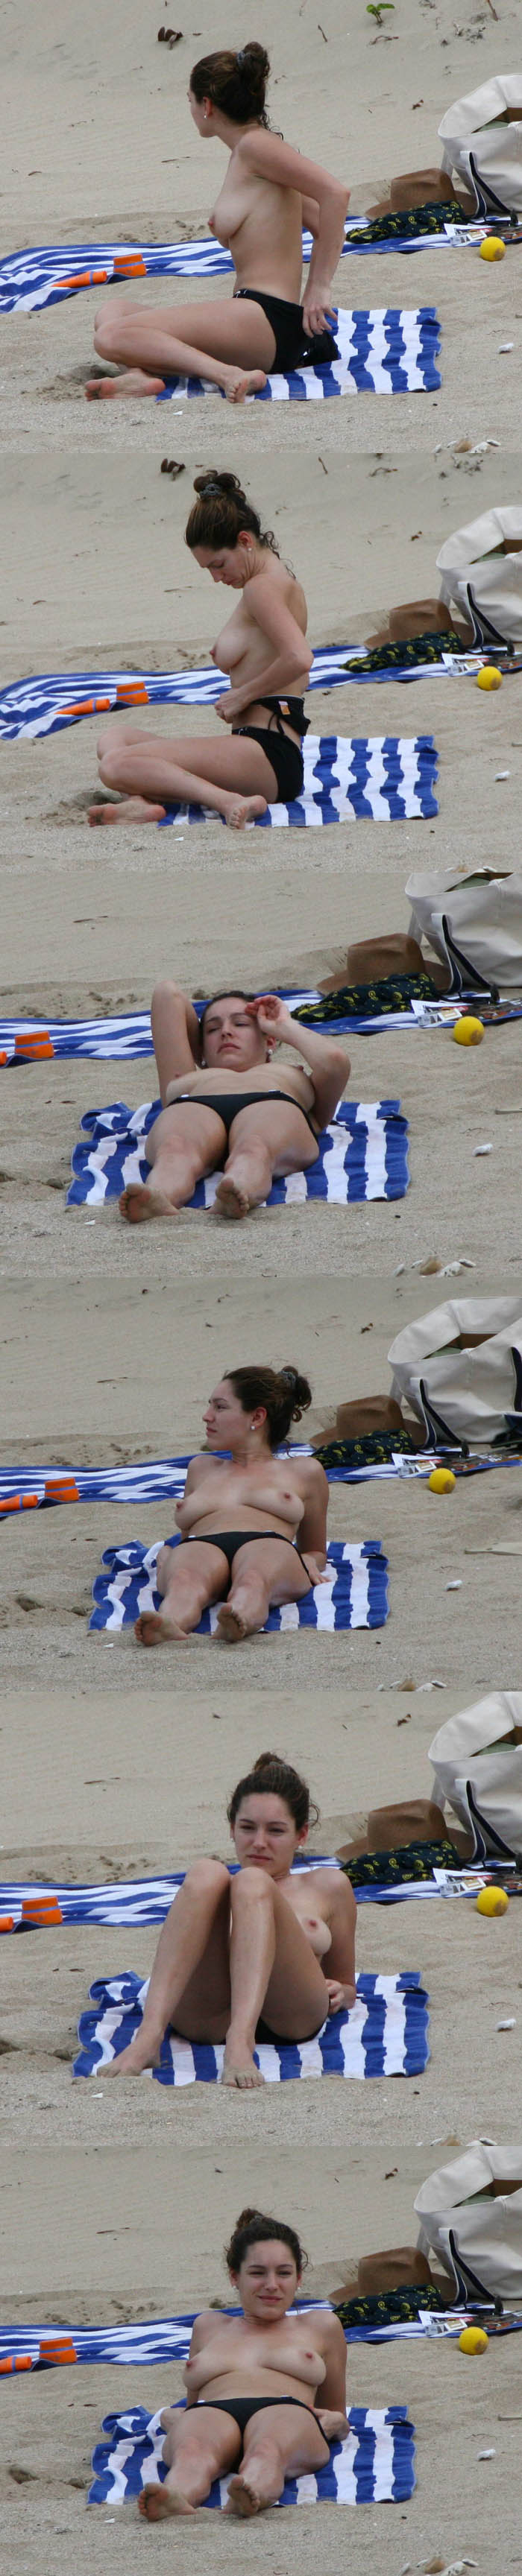 Kelly Brook topless : Kelly Brook seins nus fait bronzette tranquillement sur la plage